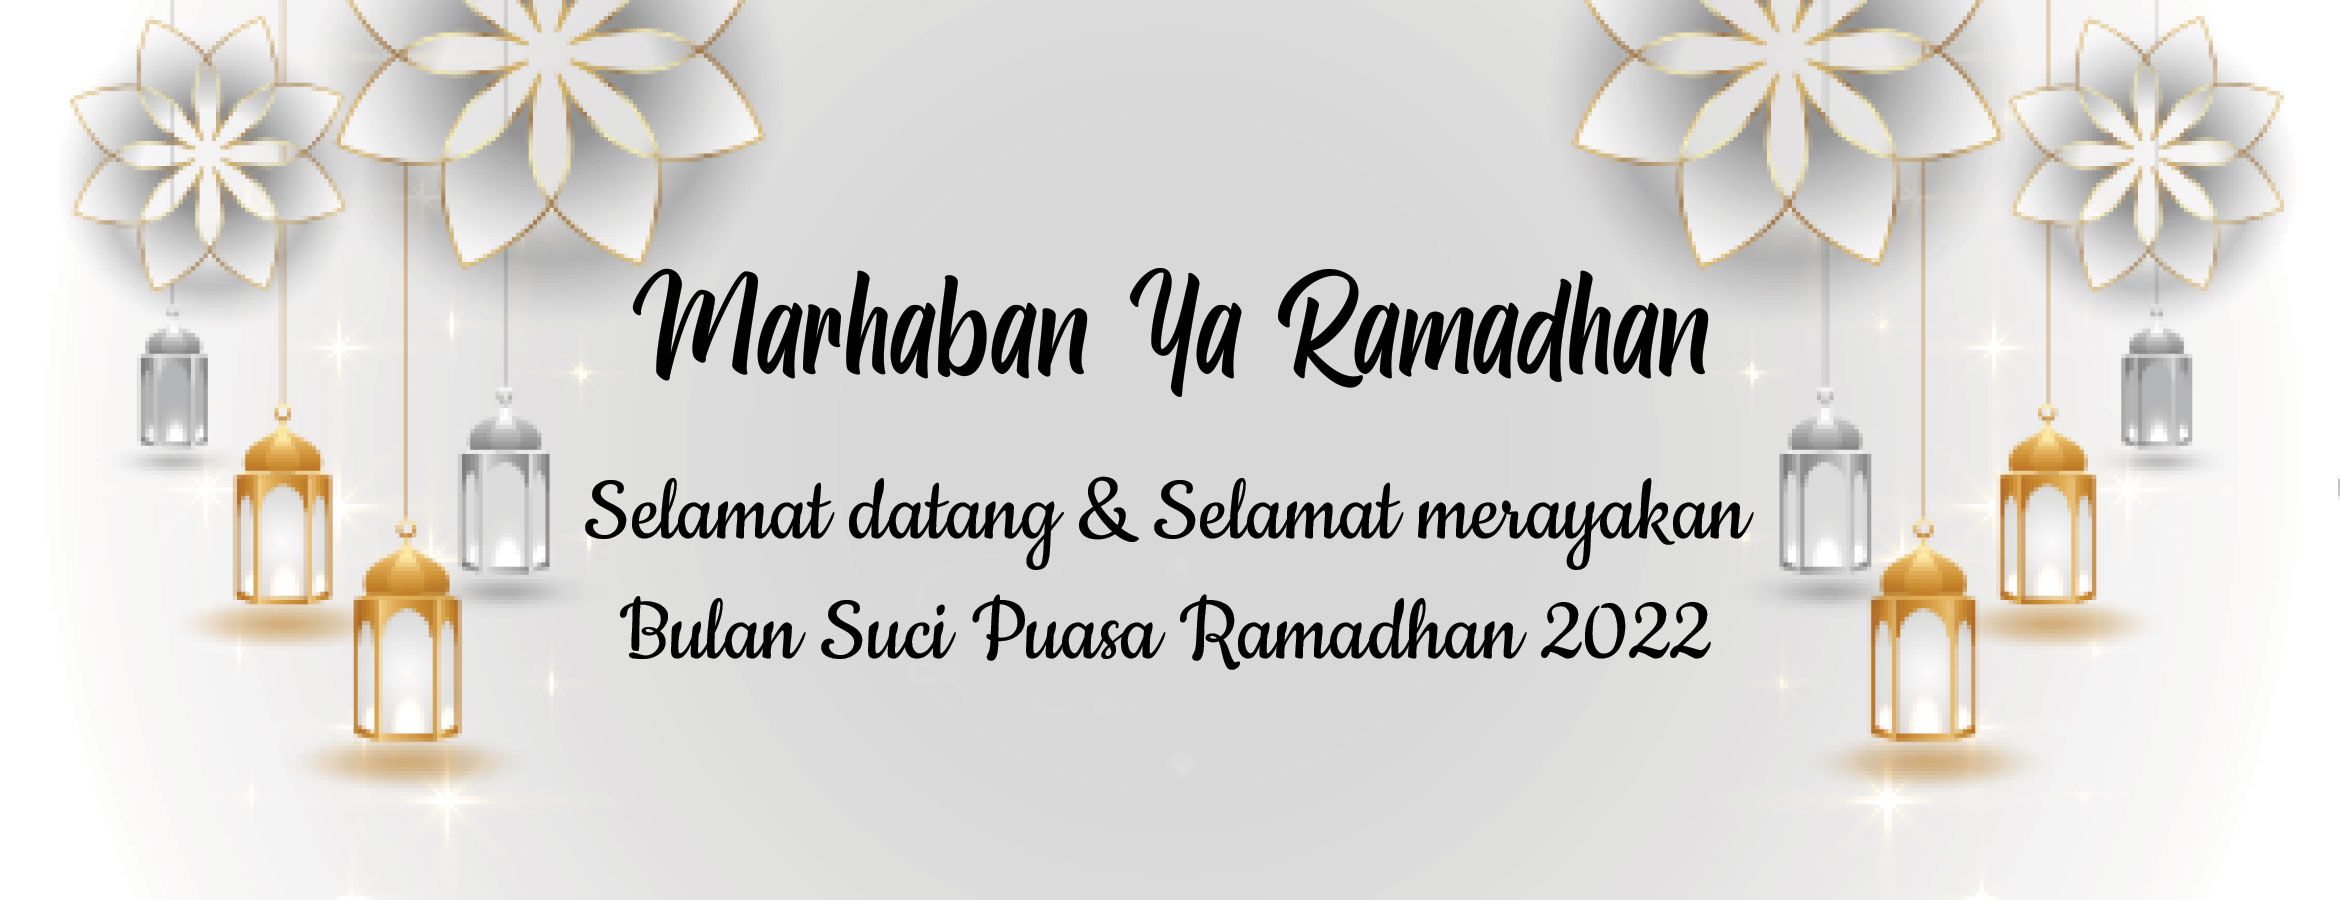 Poster Tarhib Ramadhan 2022